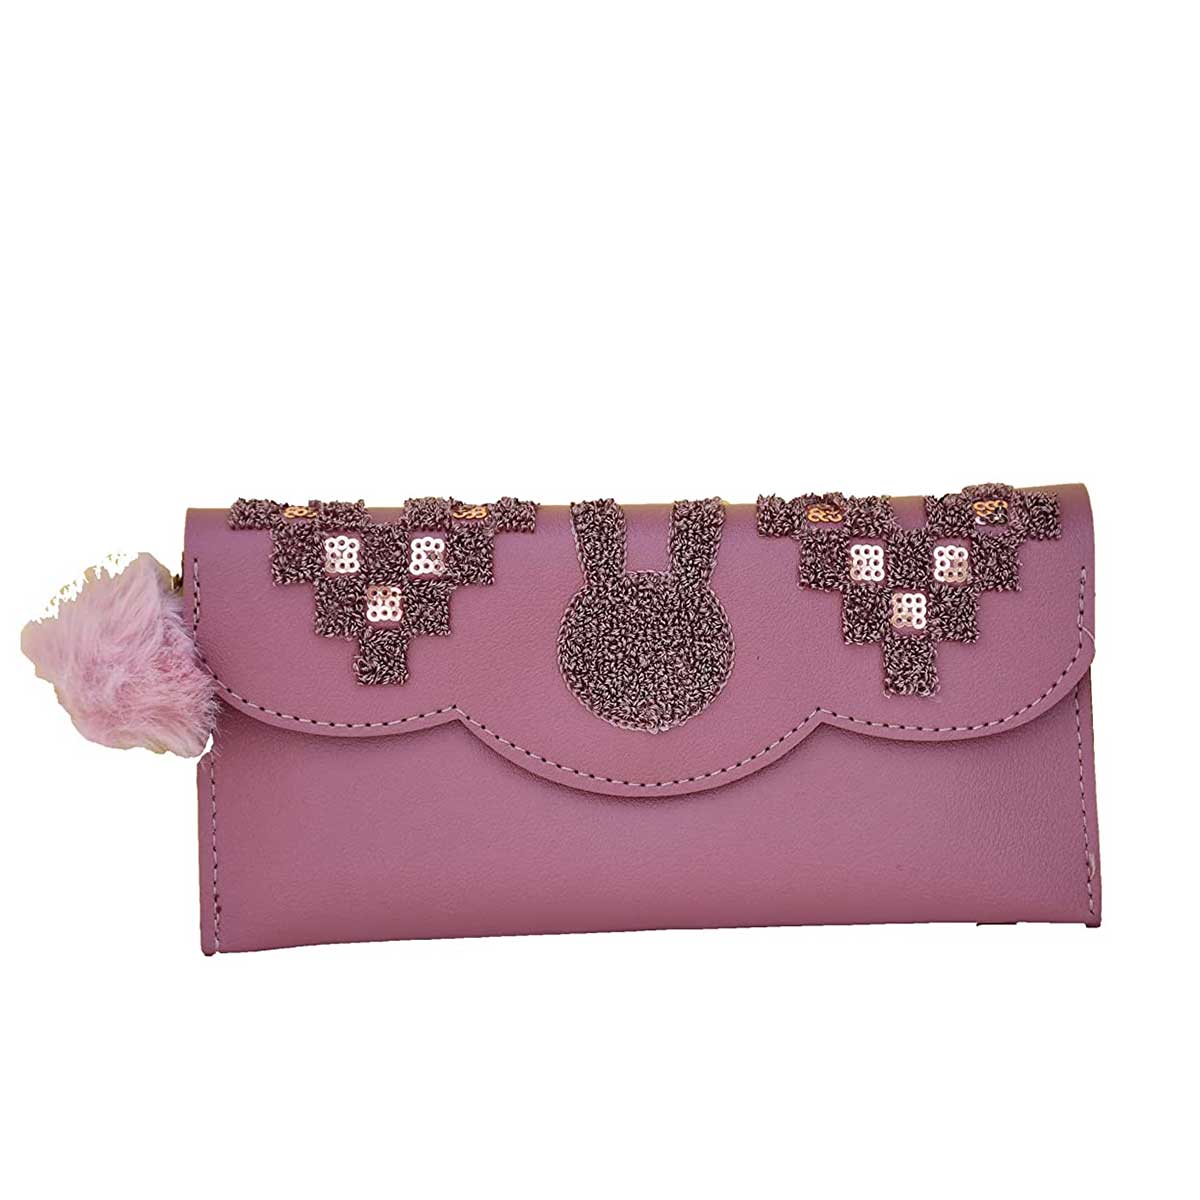 Little girls Pink Sparkle Pearl Bow handbag/purse | eBay